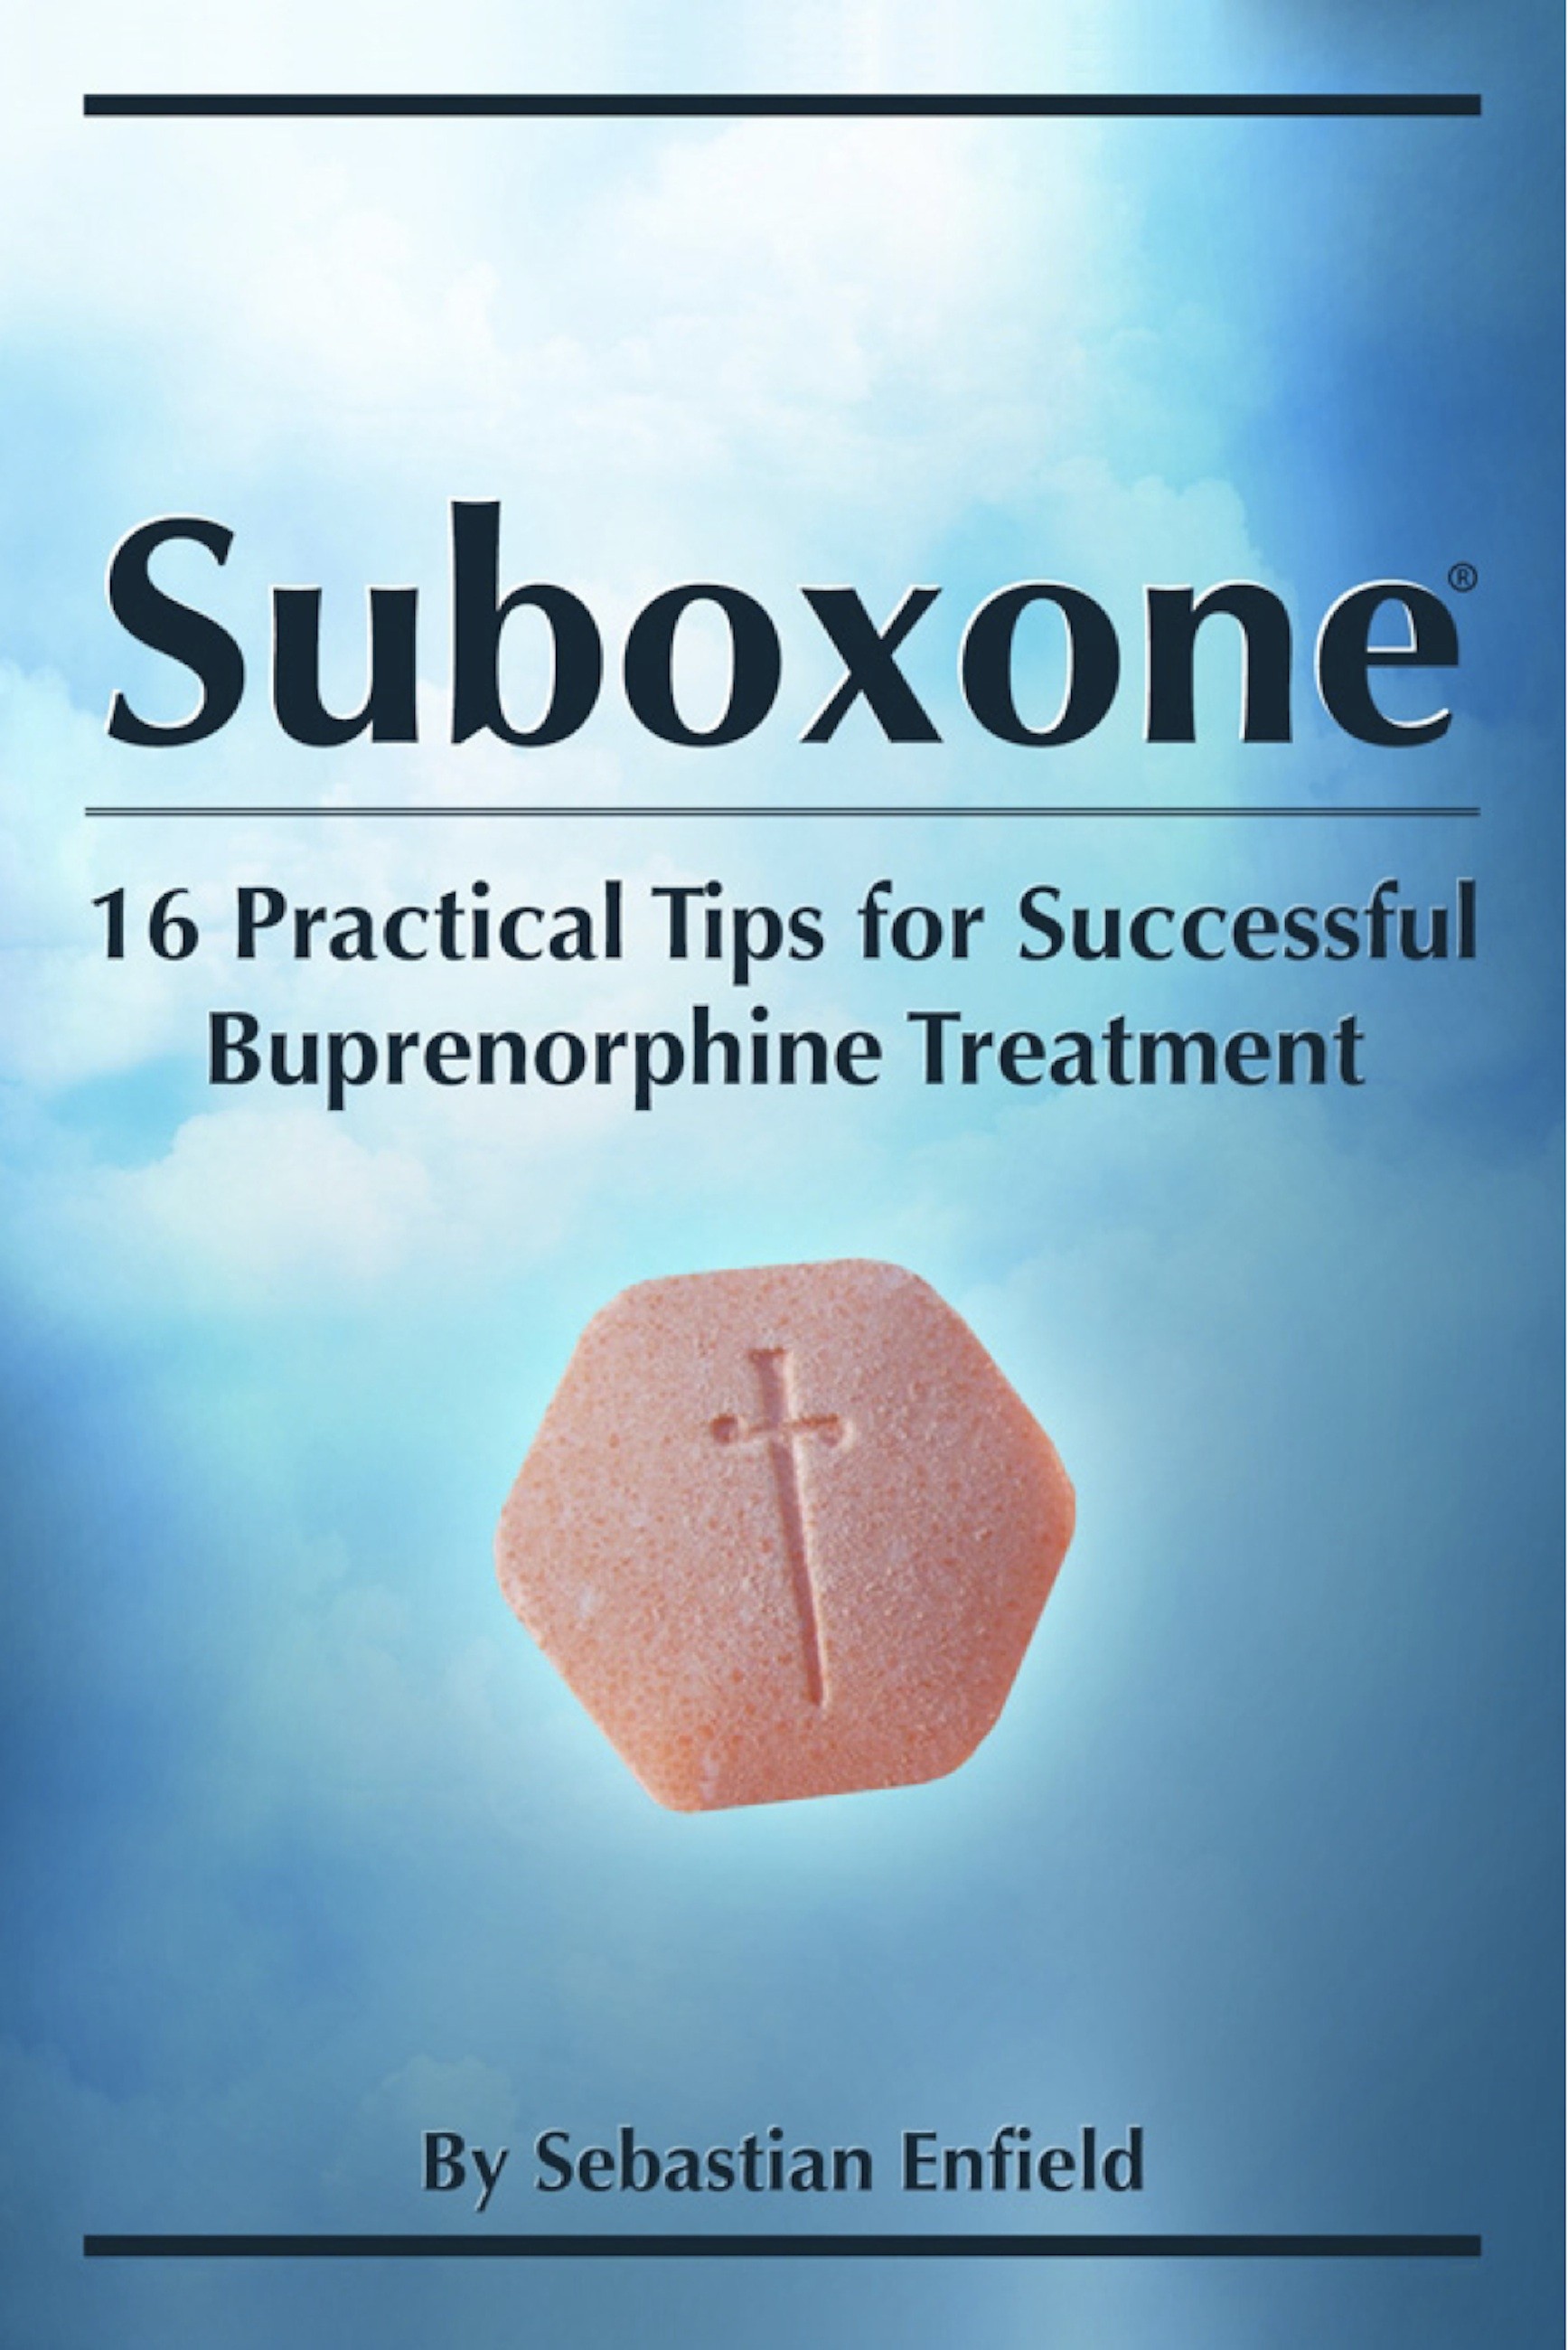 Suboxone: 16 Practical Tips for Successful Buprenorphine Treatment